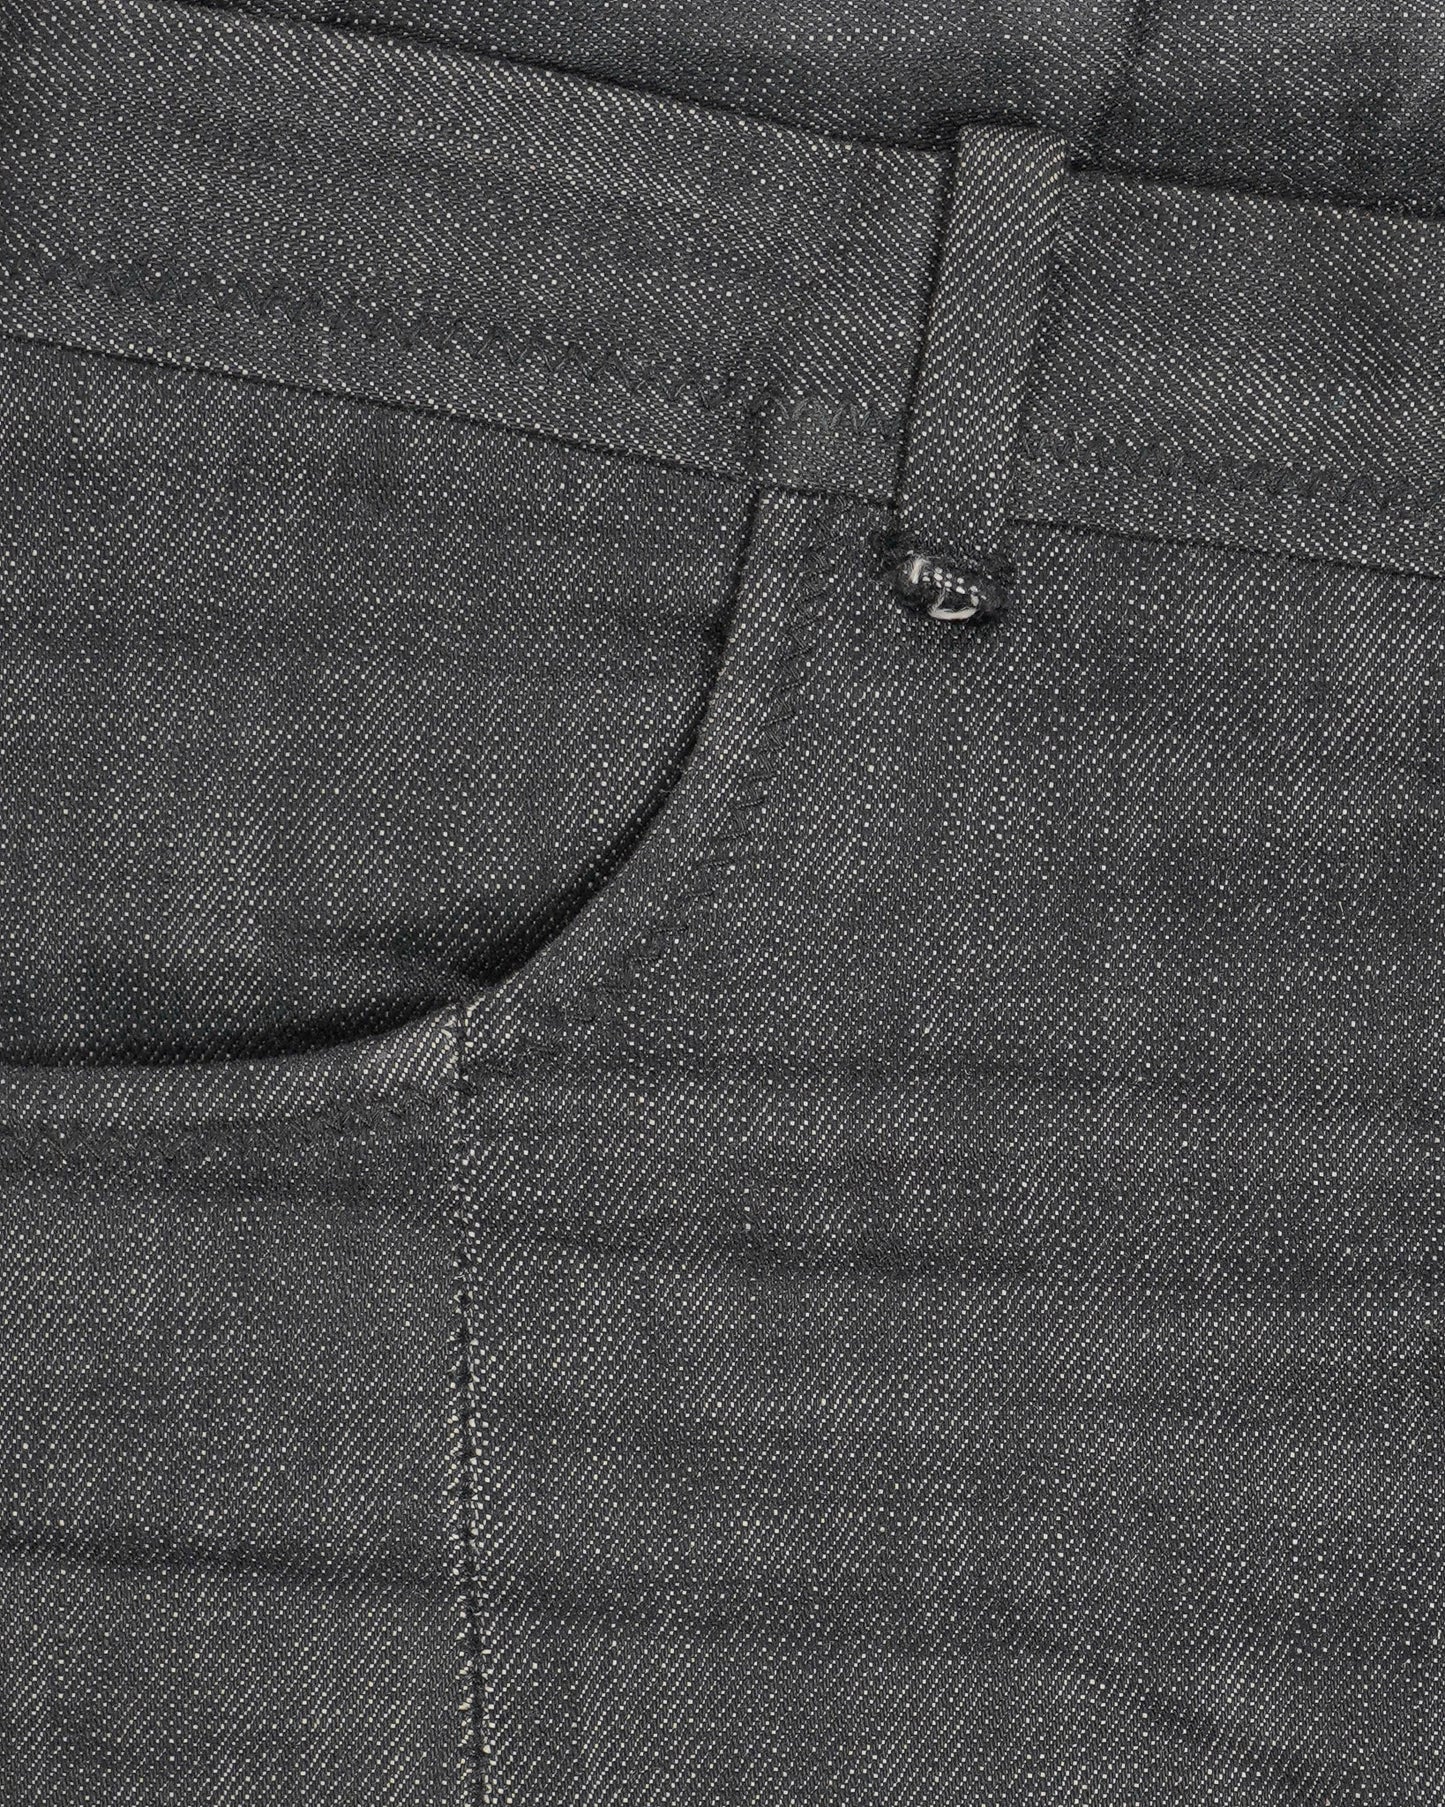 Label Under Construction 1/3rd Seam Overlock Jeans